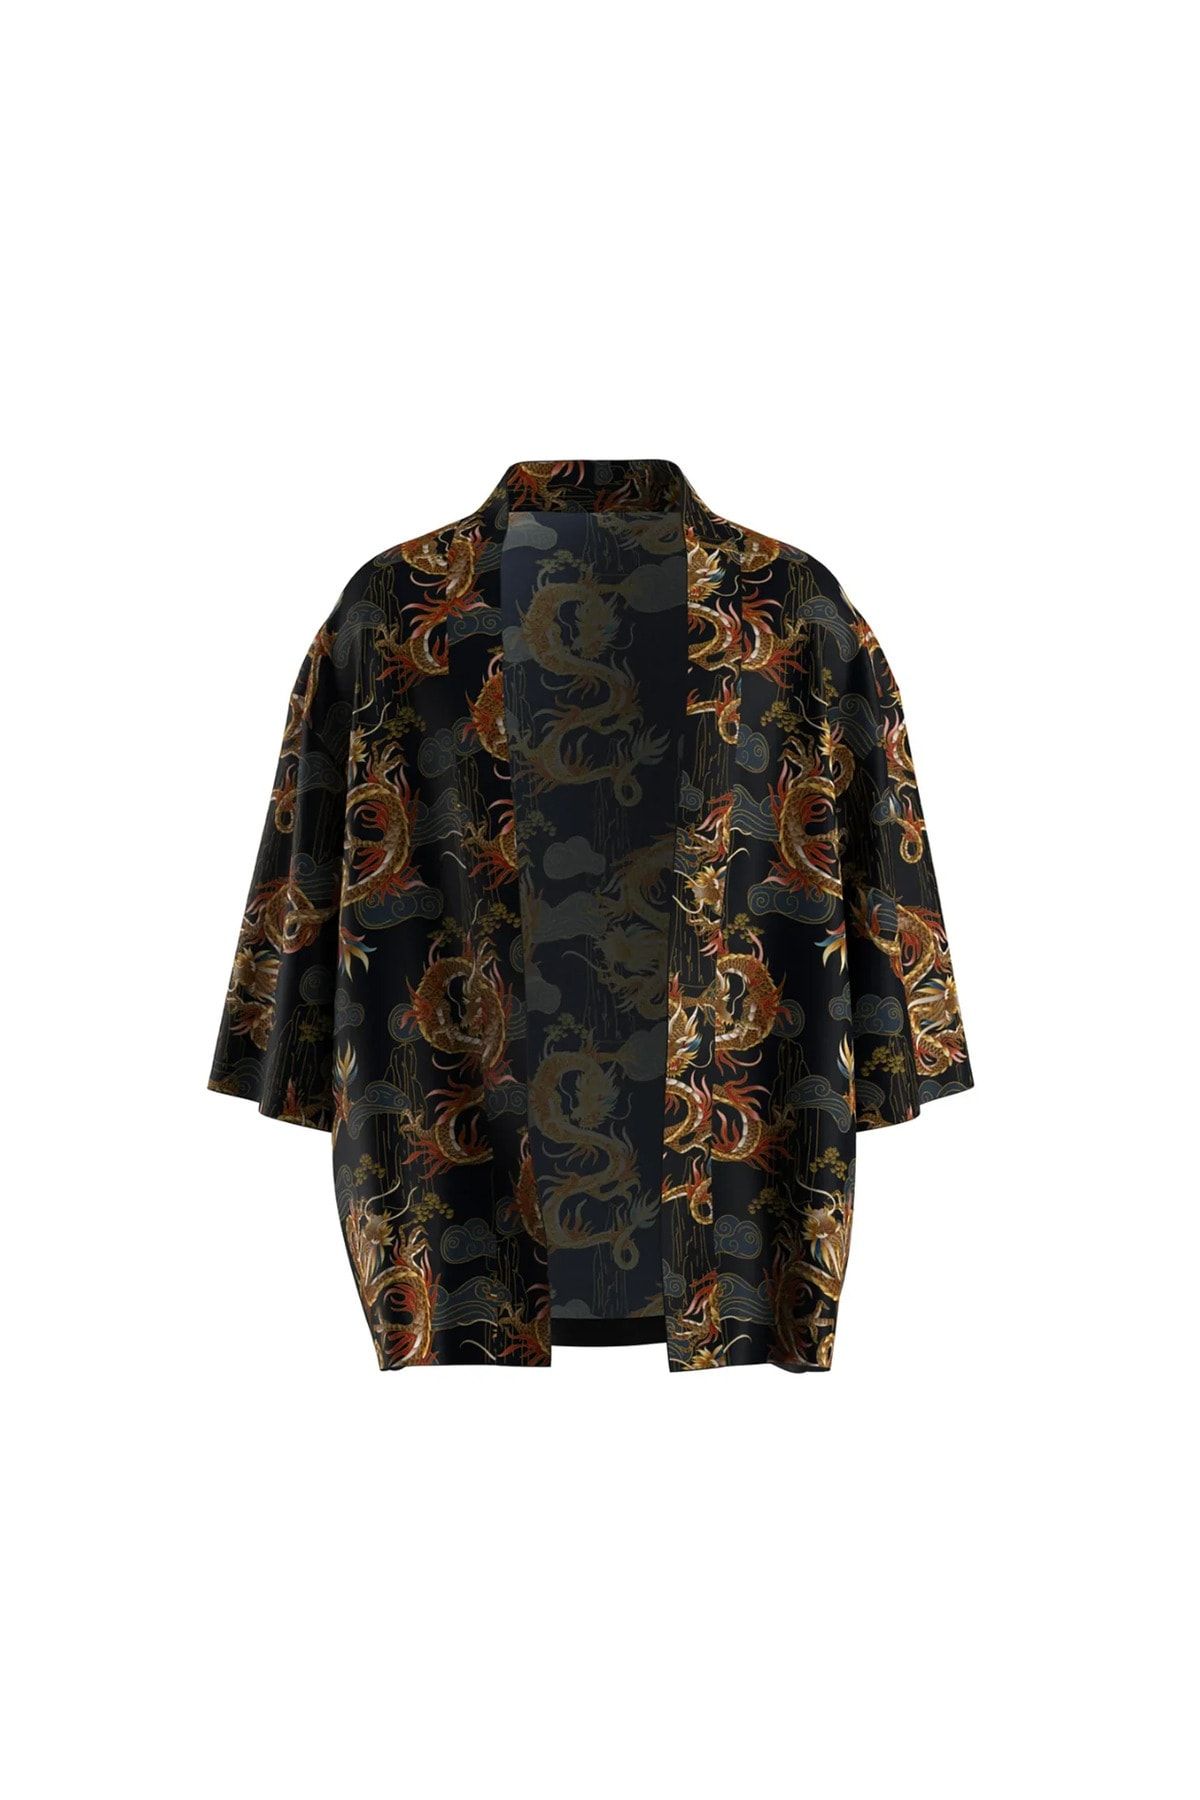 Shout Oversize Dragon Limited Edition Unisex Kimono